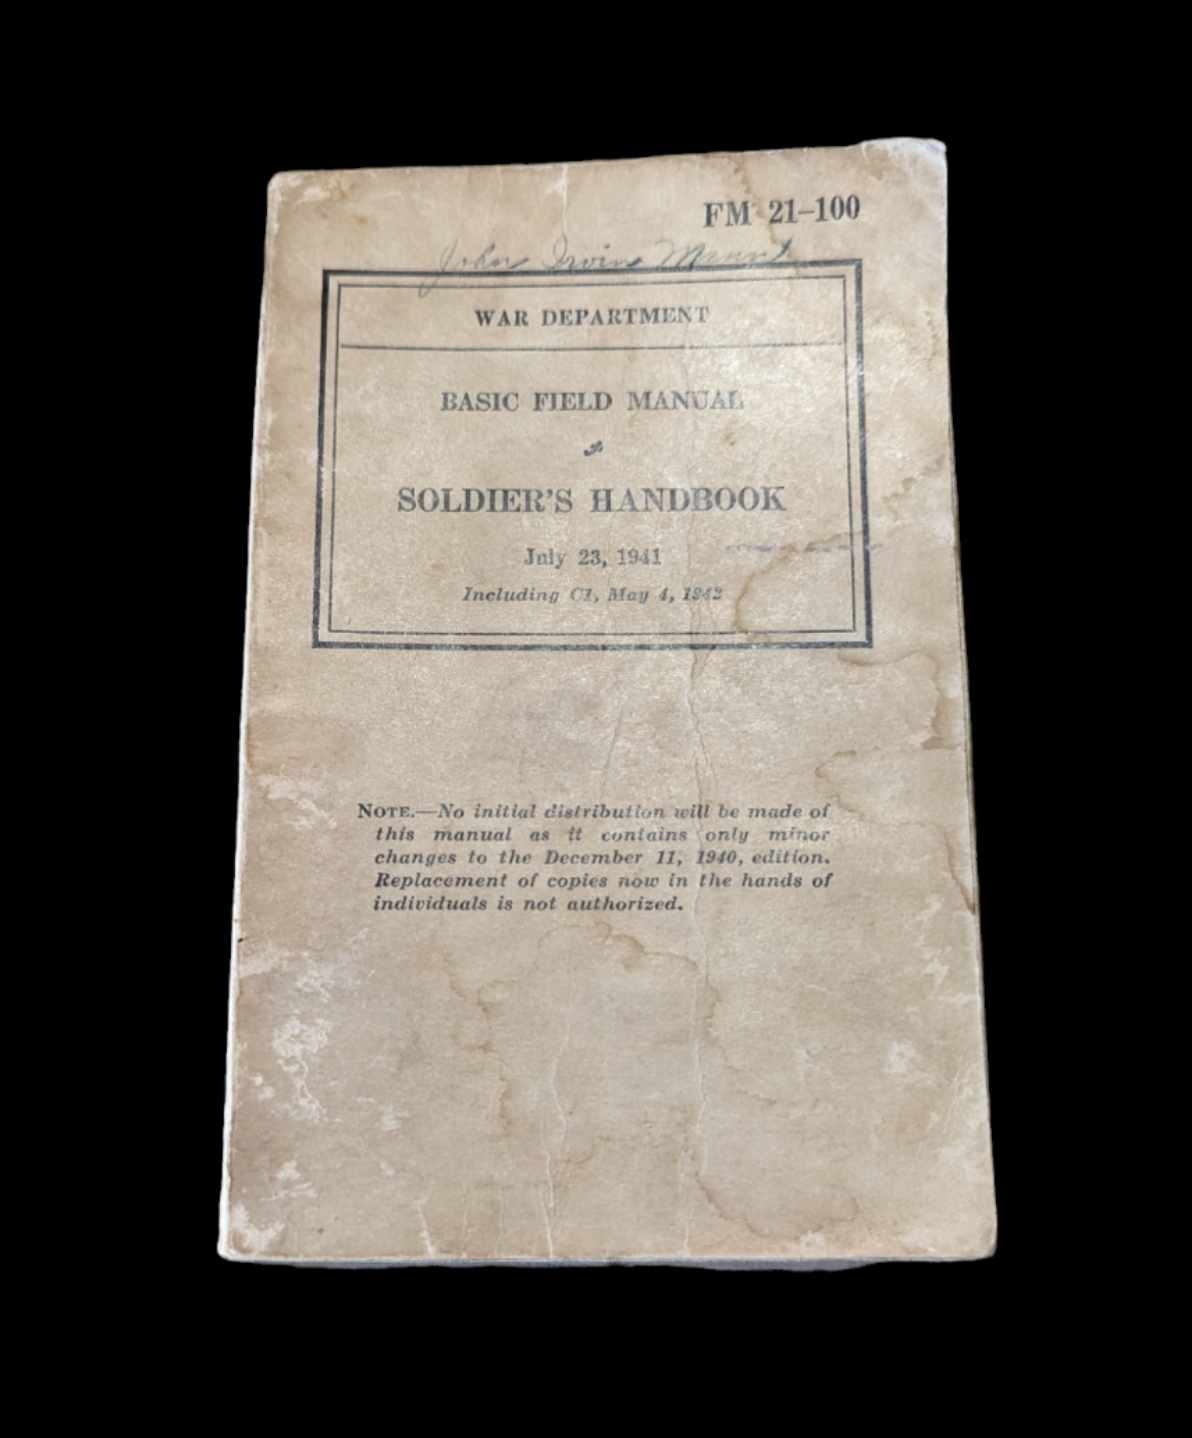 militaria : Livret instruction Soldat US ww2 / Soldier's handbook FM 21-100 1941